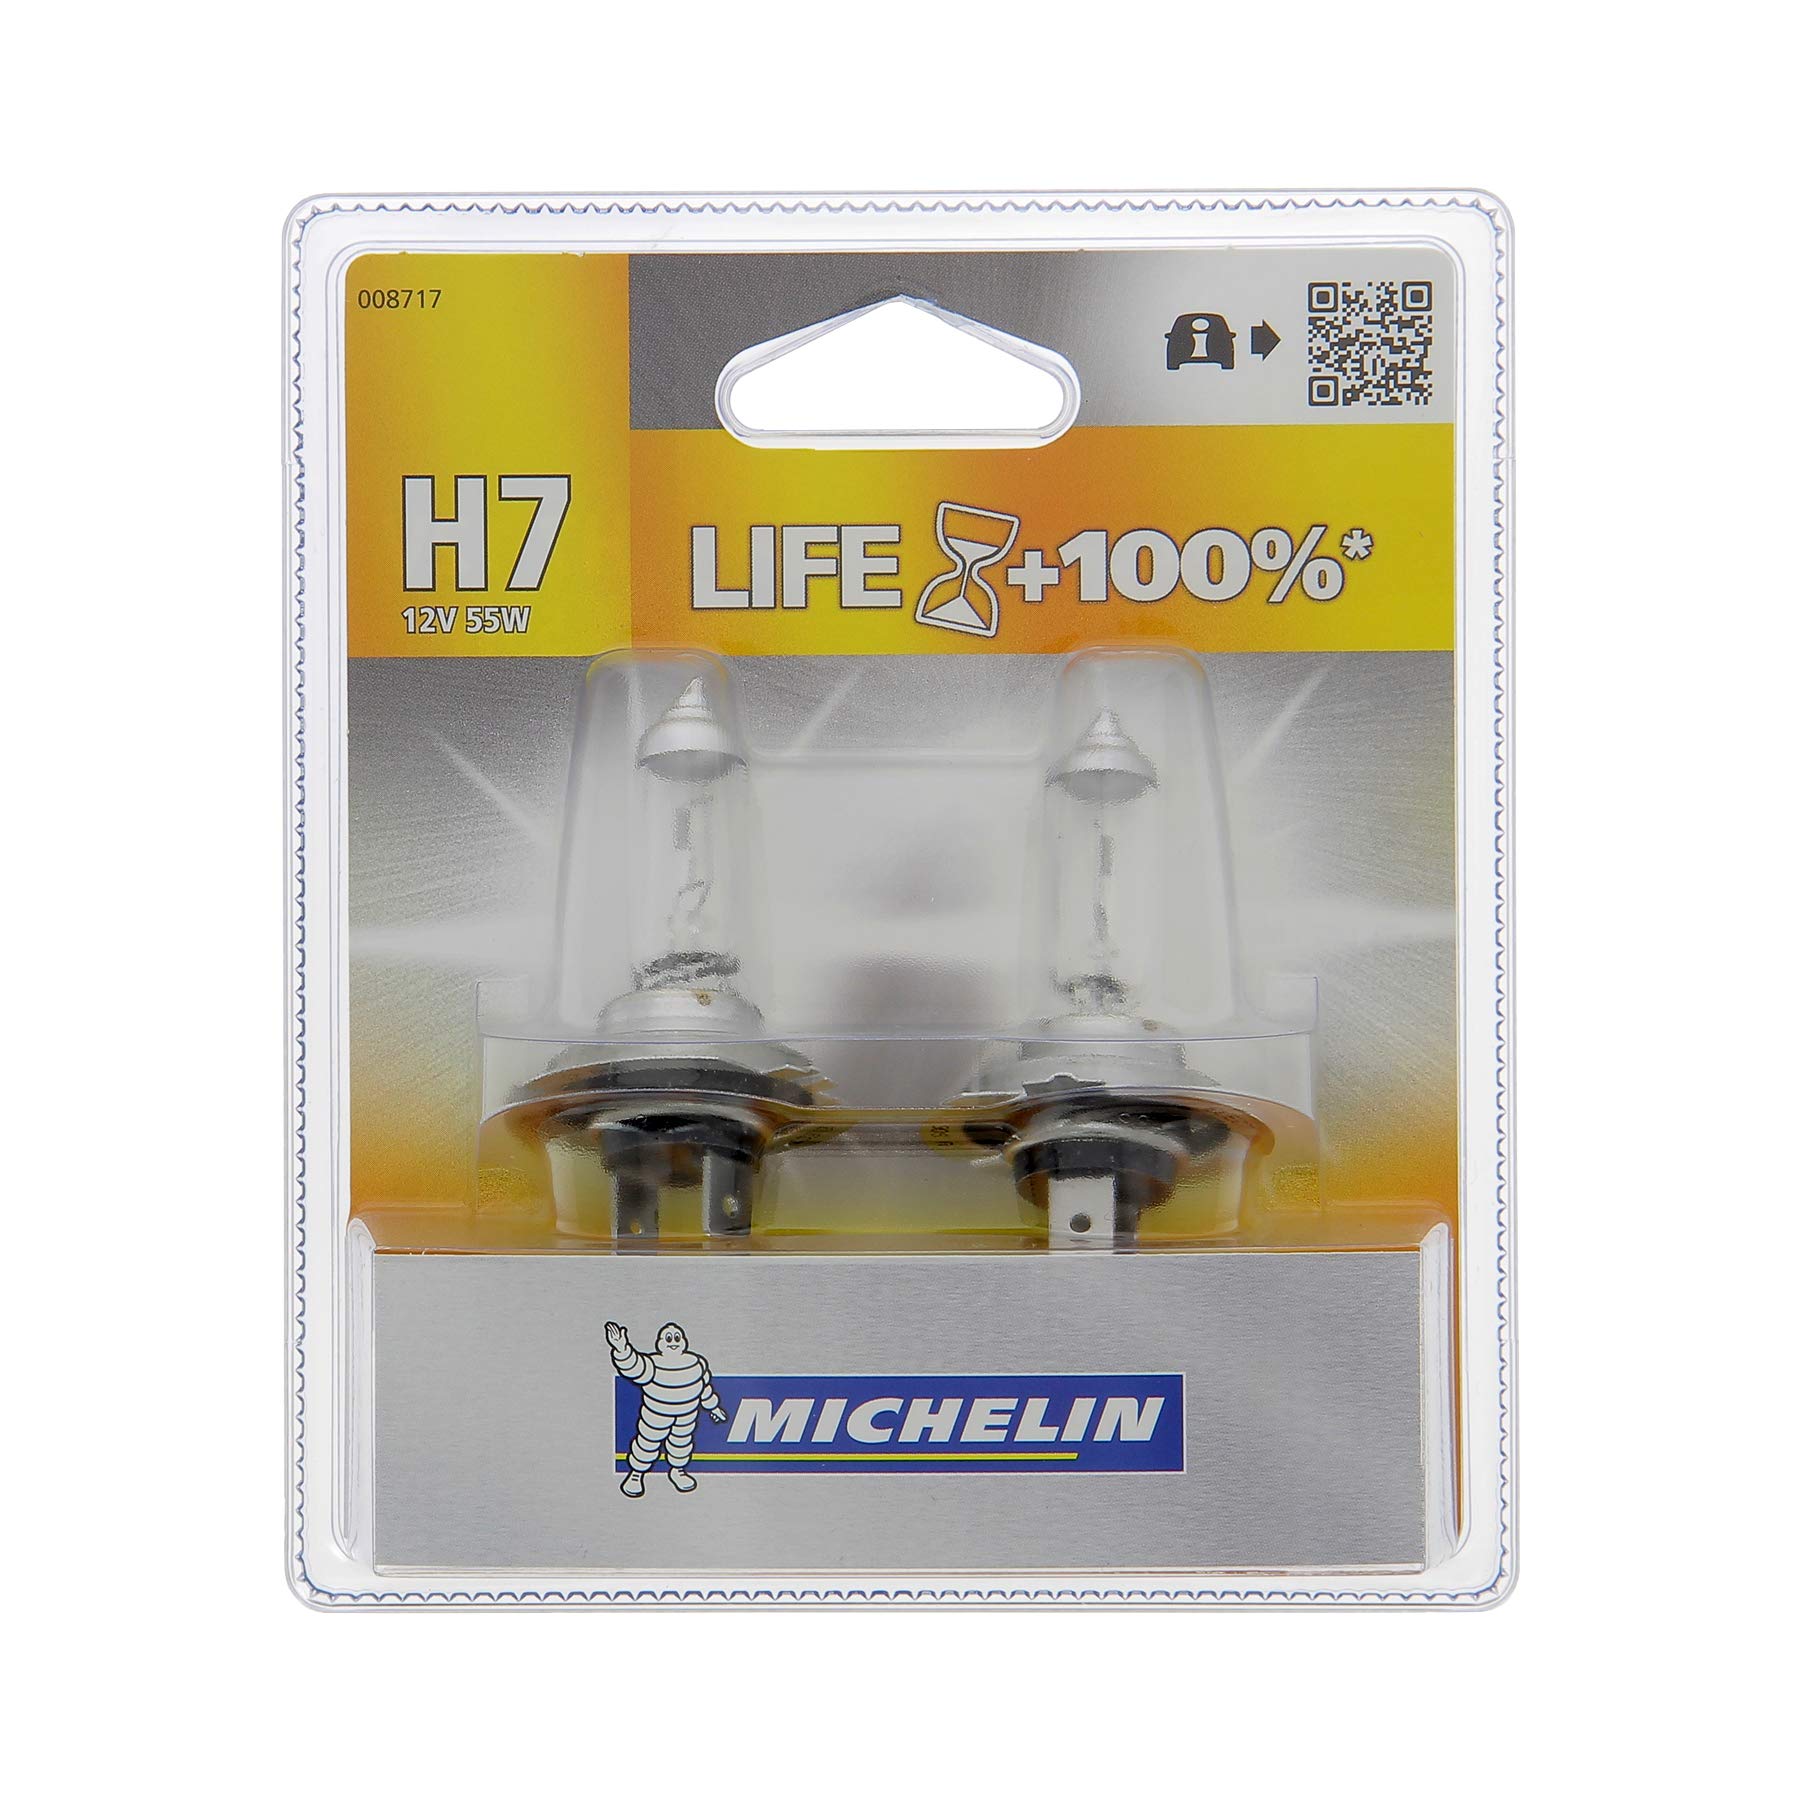 Michelin 008717 Life +100% 2 Glühlampe H7 12 V 55W von MICHELIN